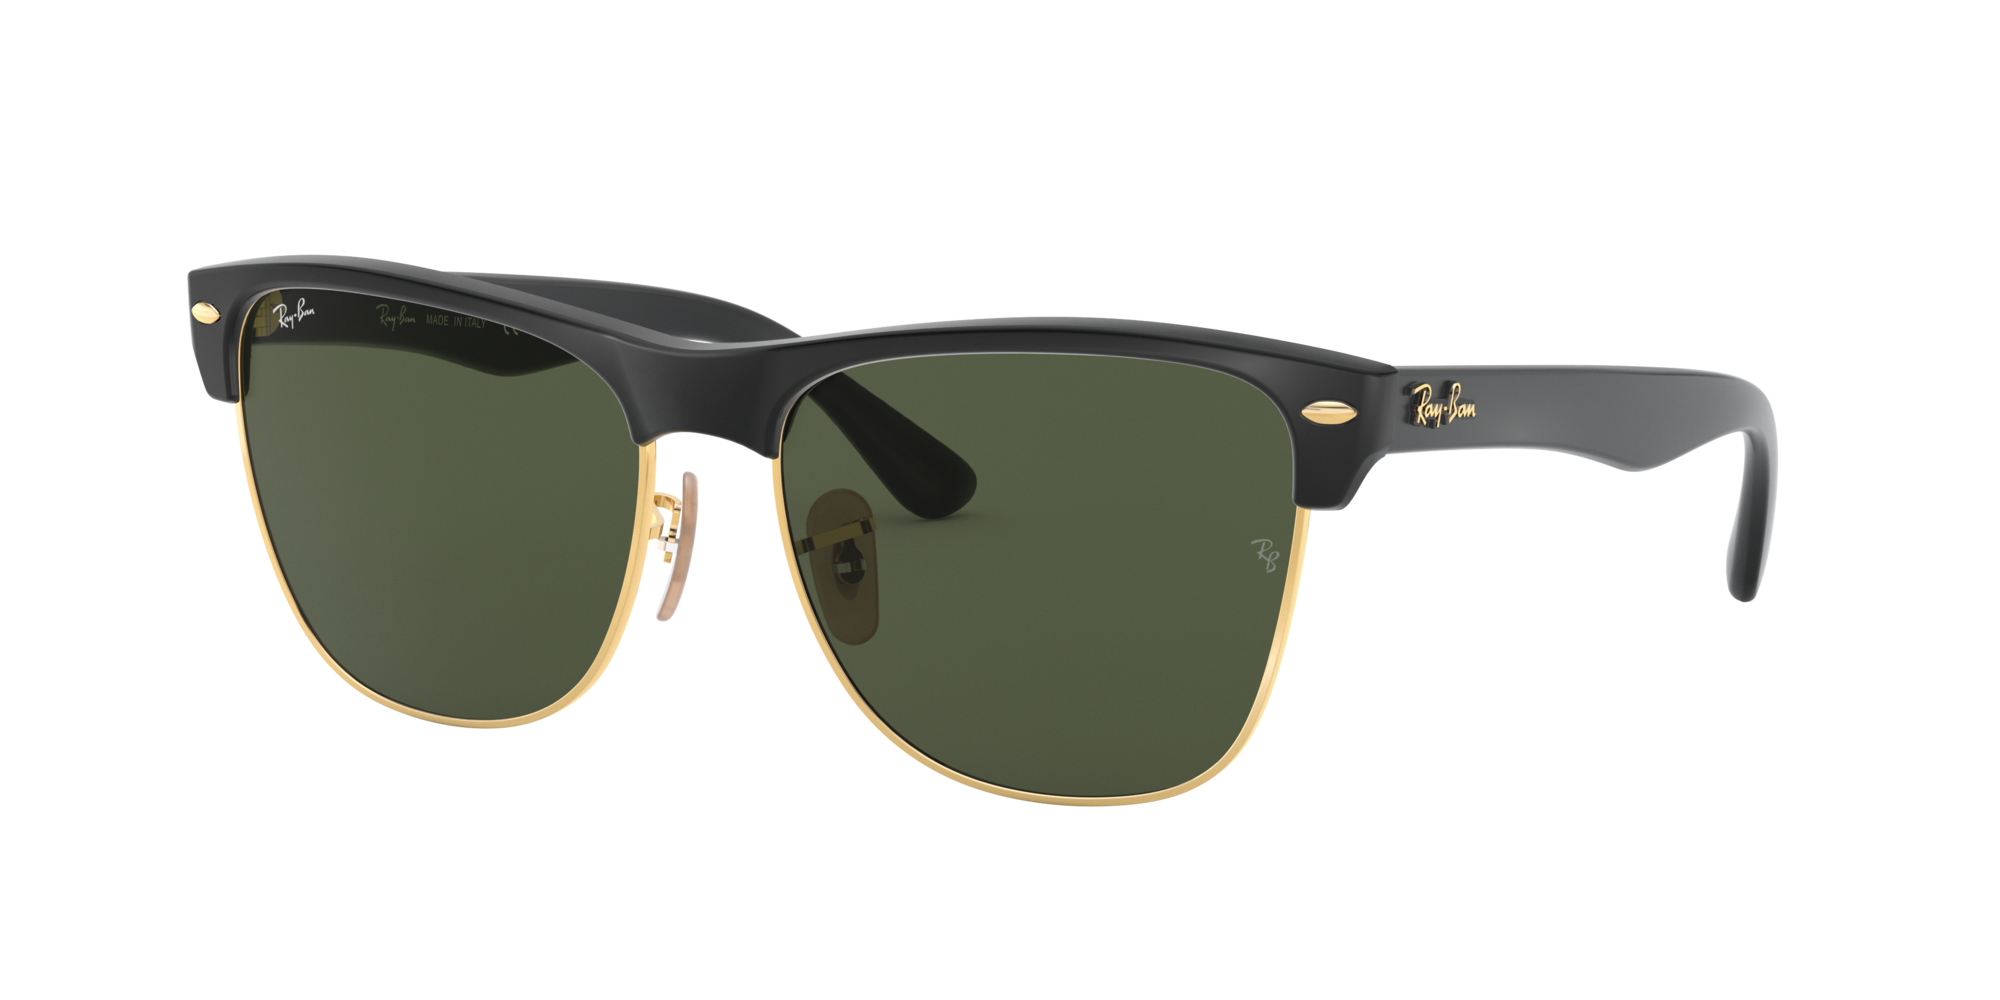 ray ban rb4175 sunglasses white frame brown lens